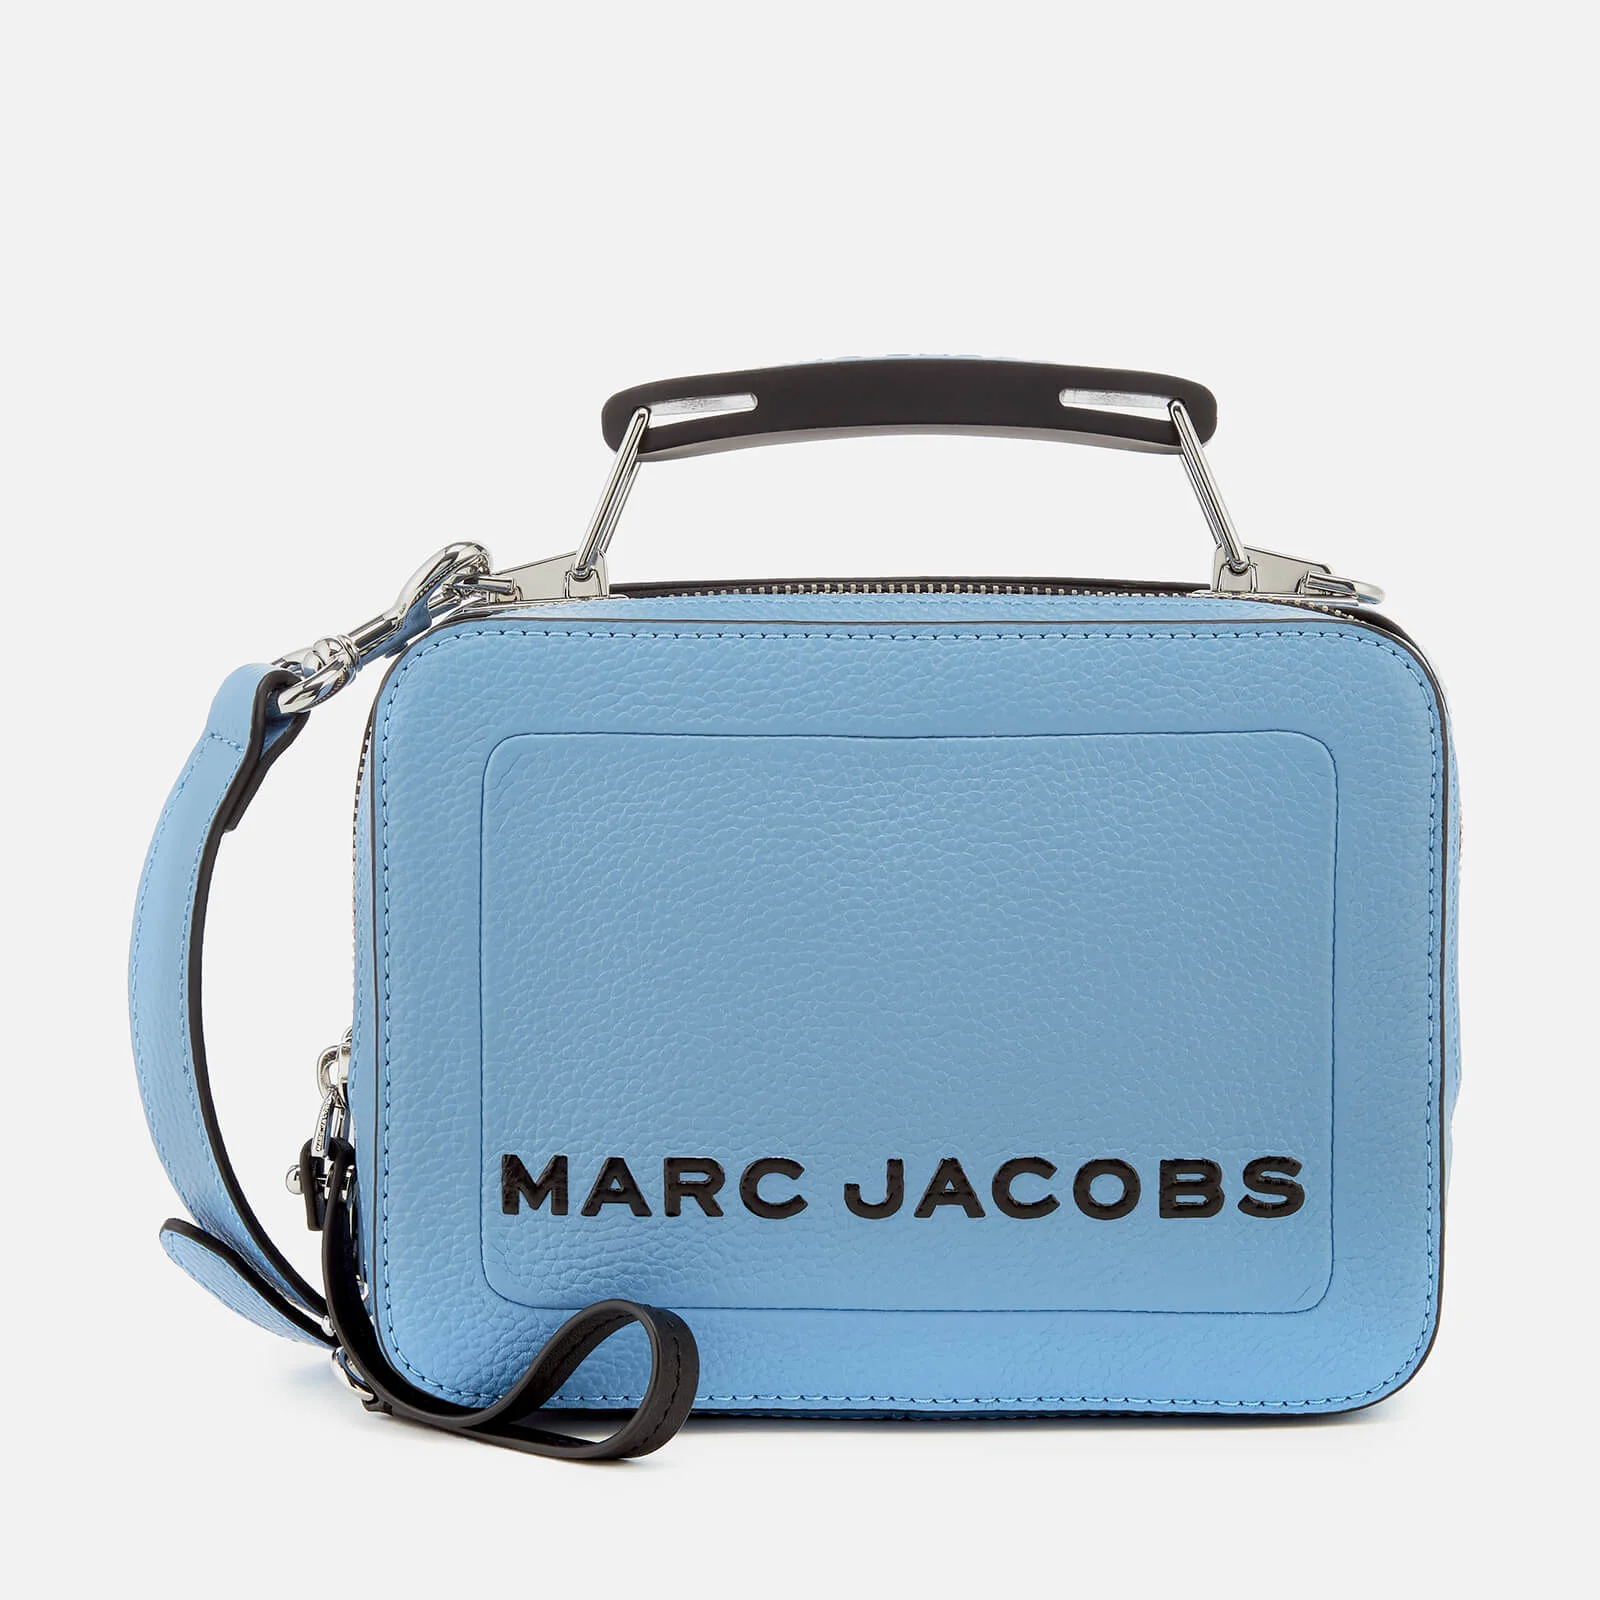 Marc Jacobs Women's The Box 20 Cross Body Bag - Aquaria Image 1